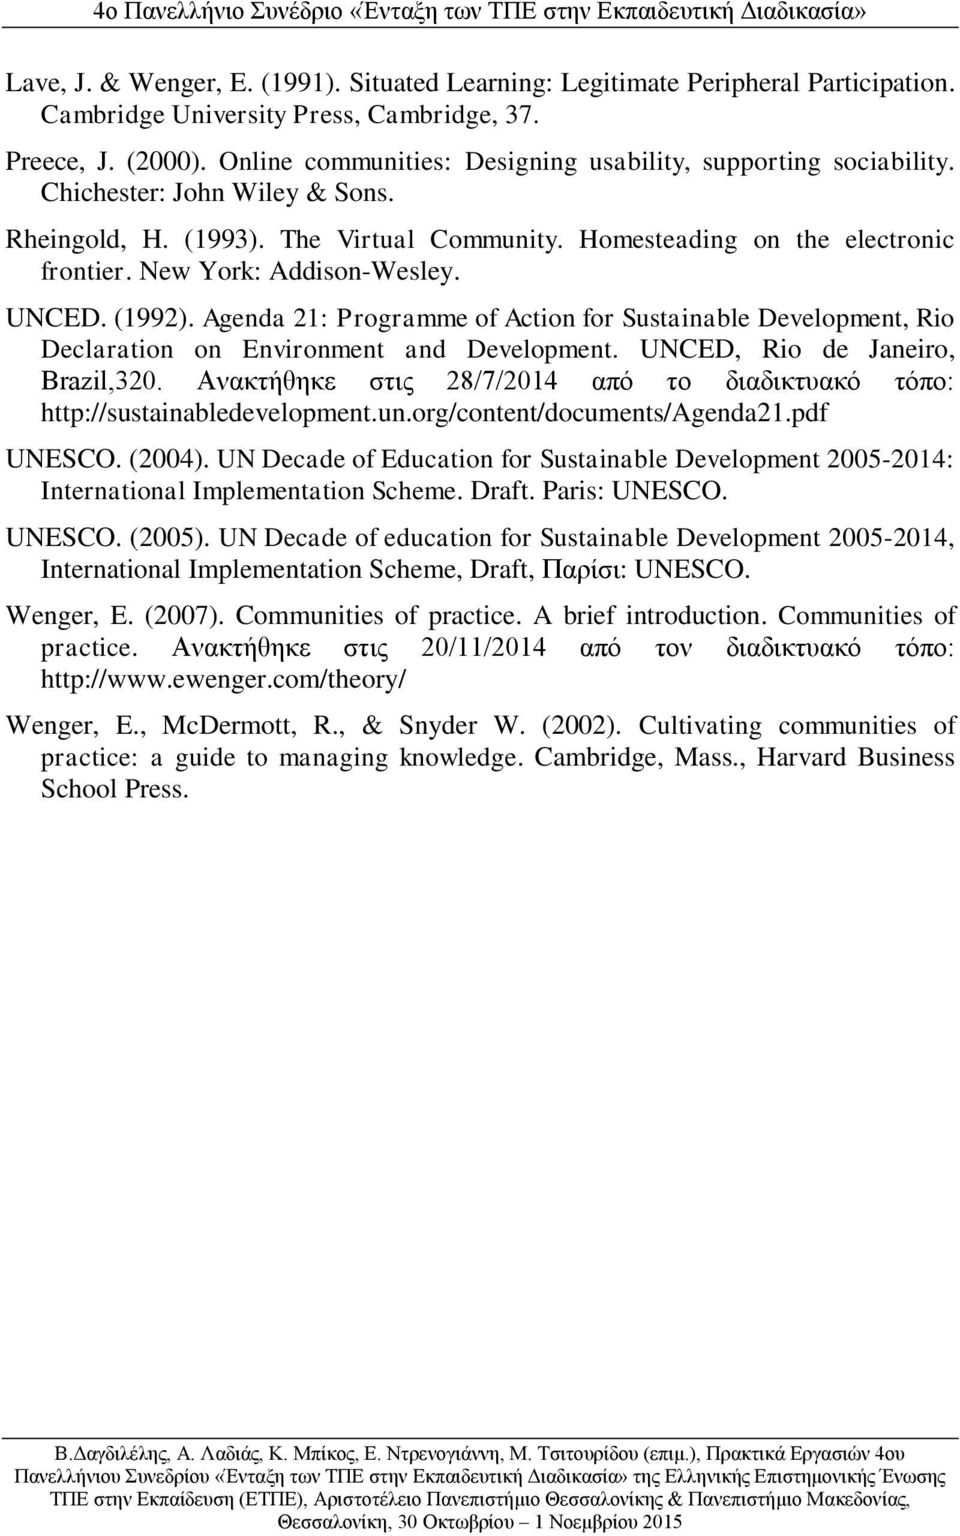 New York: Addison-Wesley. UNCED. (1992). Agenda 21: Programme of Action for Sustainable Development, Rio Declaration on Environment and Development. UNCED, Rio de Janeiro, Brazil,320.